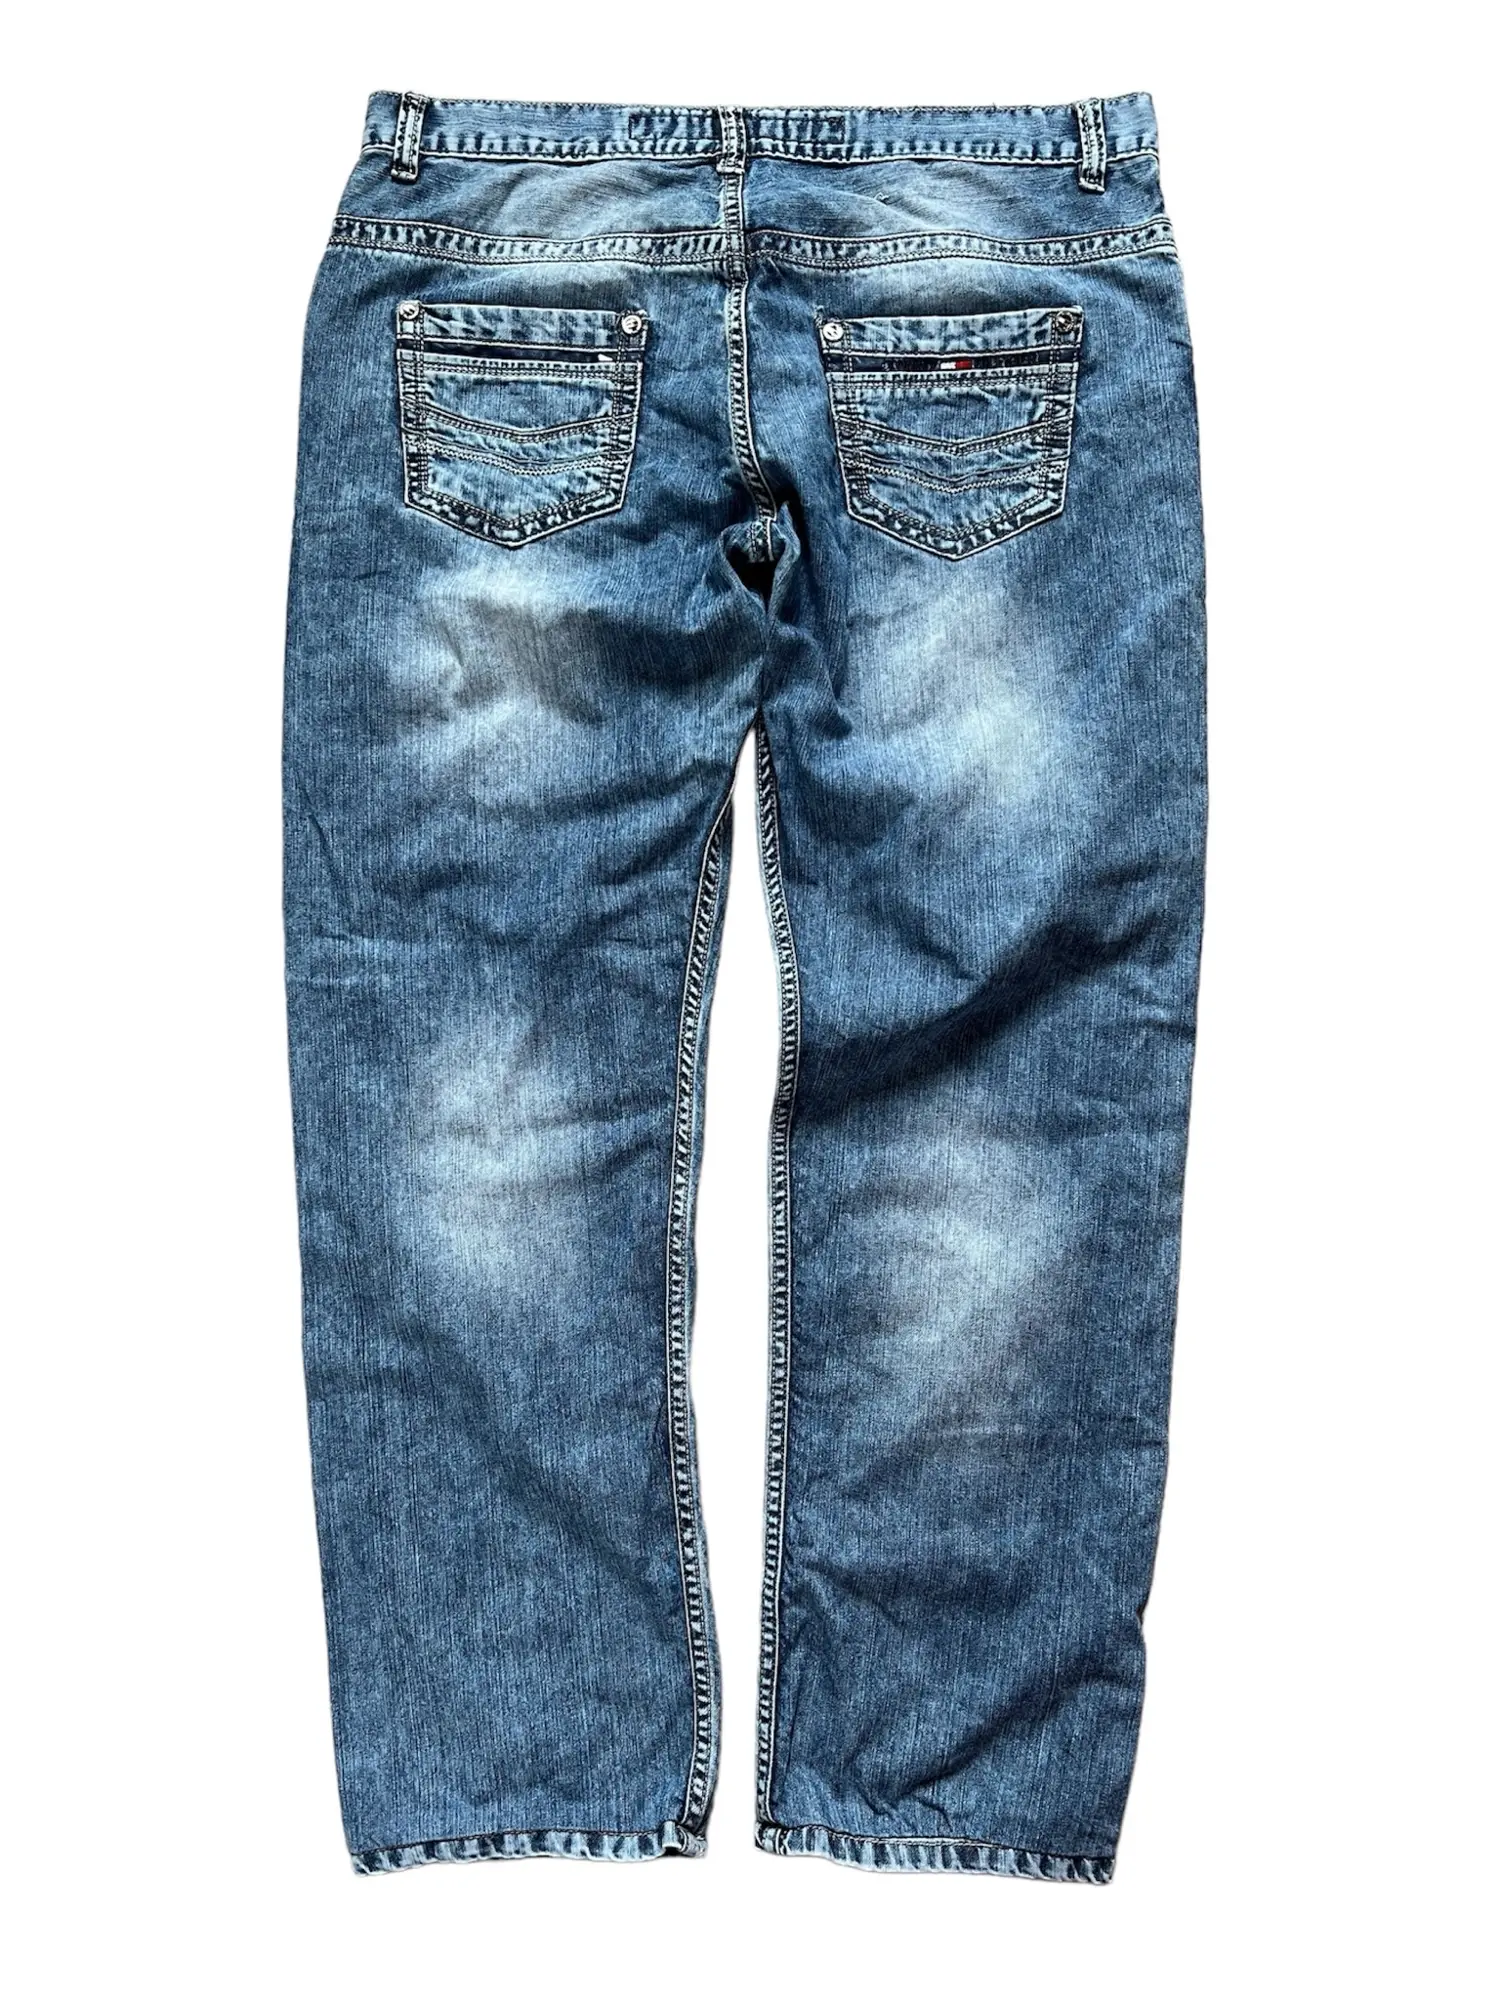 Tommy Hilfiger jeans